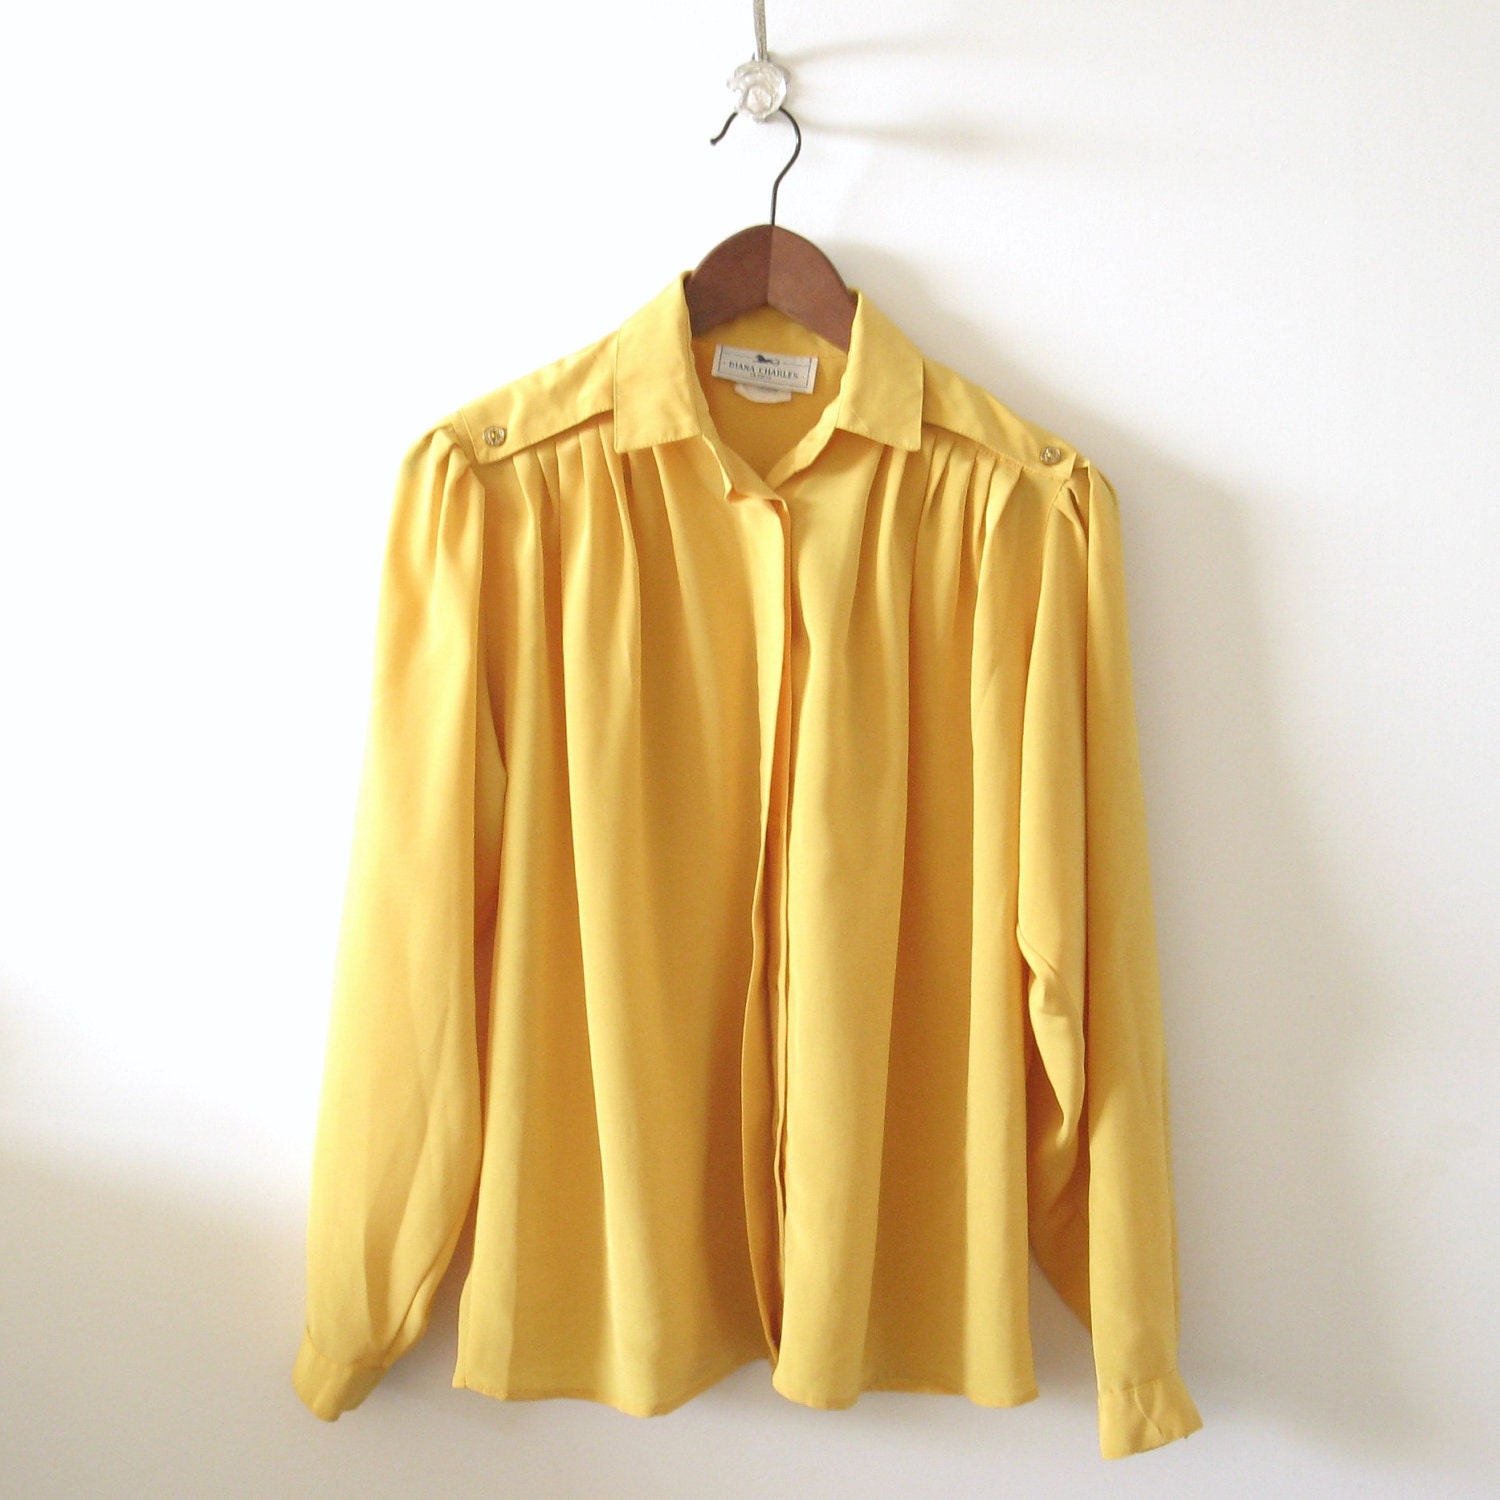 Vintage Flowy Blouse - 1980s Mustard Yellow - Medium Large by Diane Charles - TwoMoxie